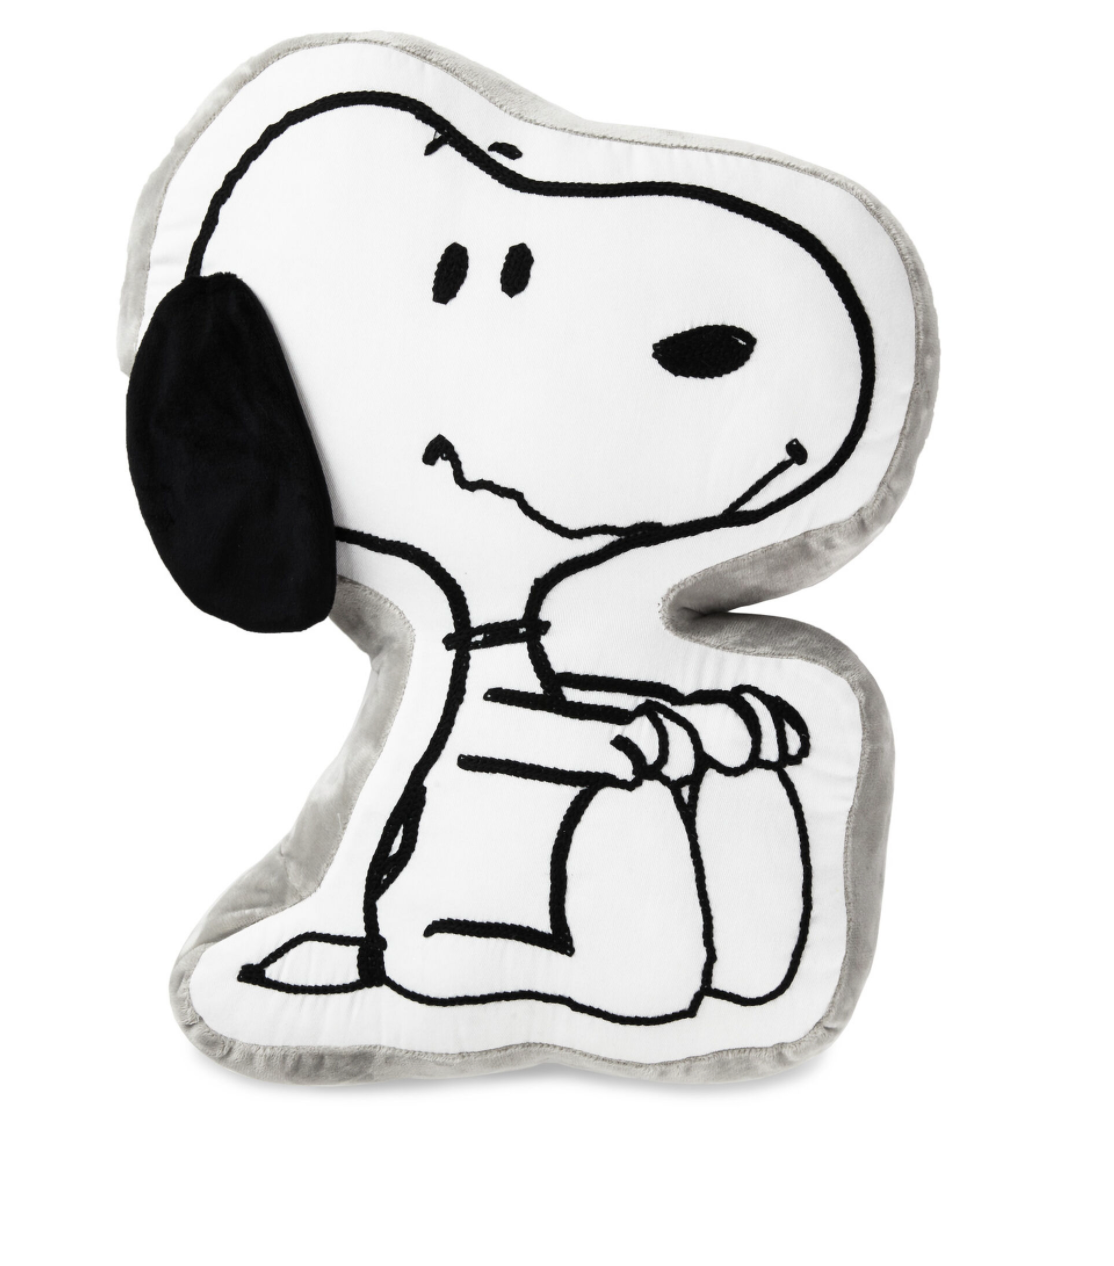 Hallmark Peanuts Snoopy Plush Pillow New with Tag